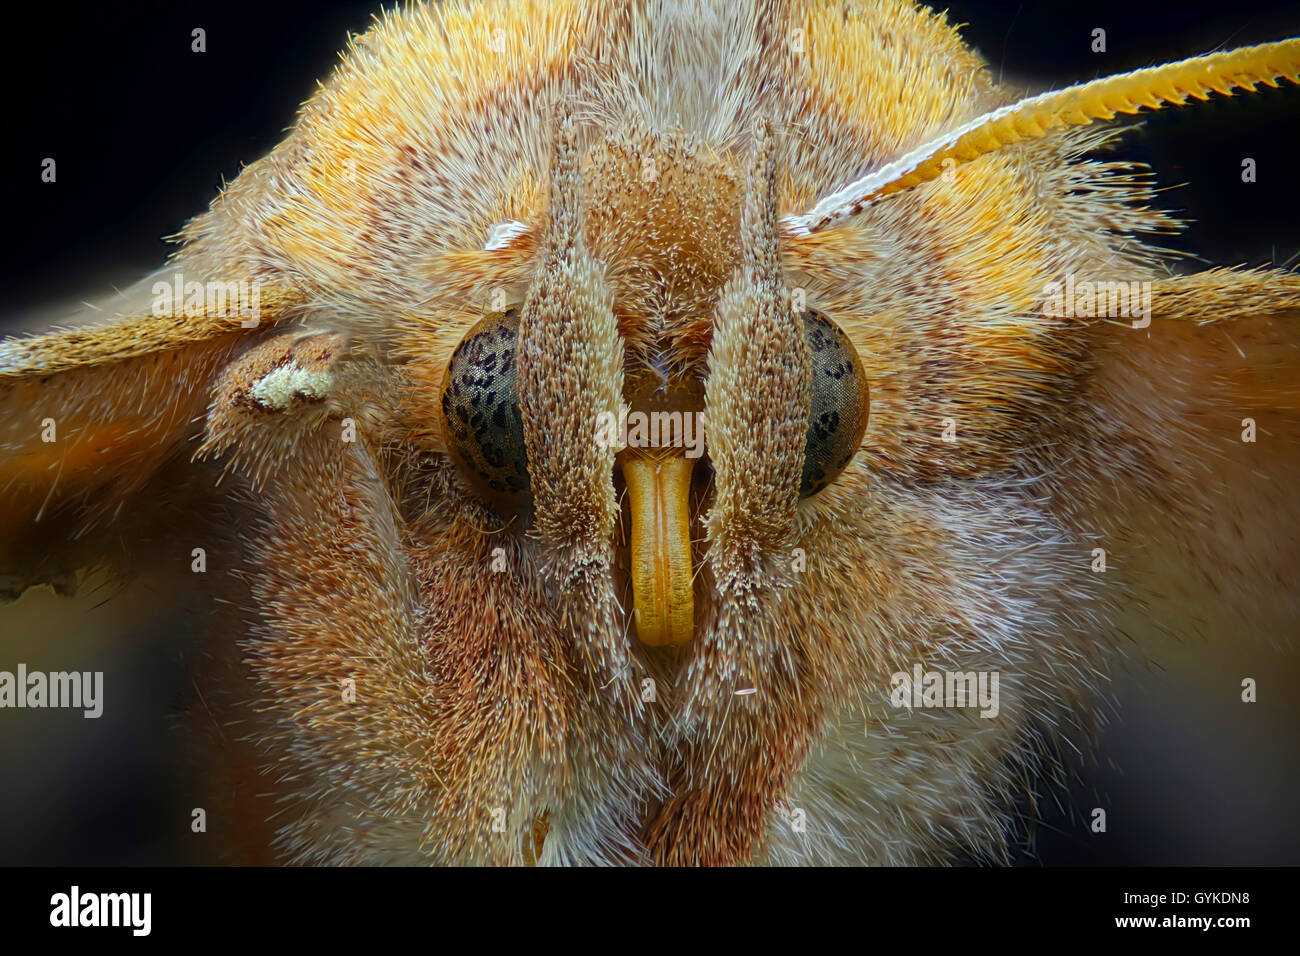 Schmetterling   (Lepidoptera), Makroaufnahme des Kopfes eines Nachtfalters | butterfly (Lepidoptera), head of a moth | BLWS41899 Stock Photo